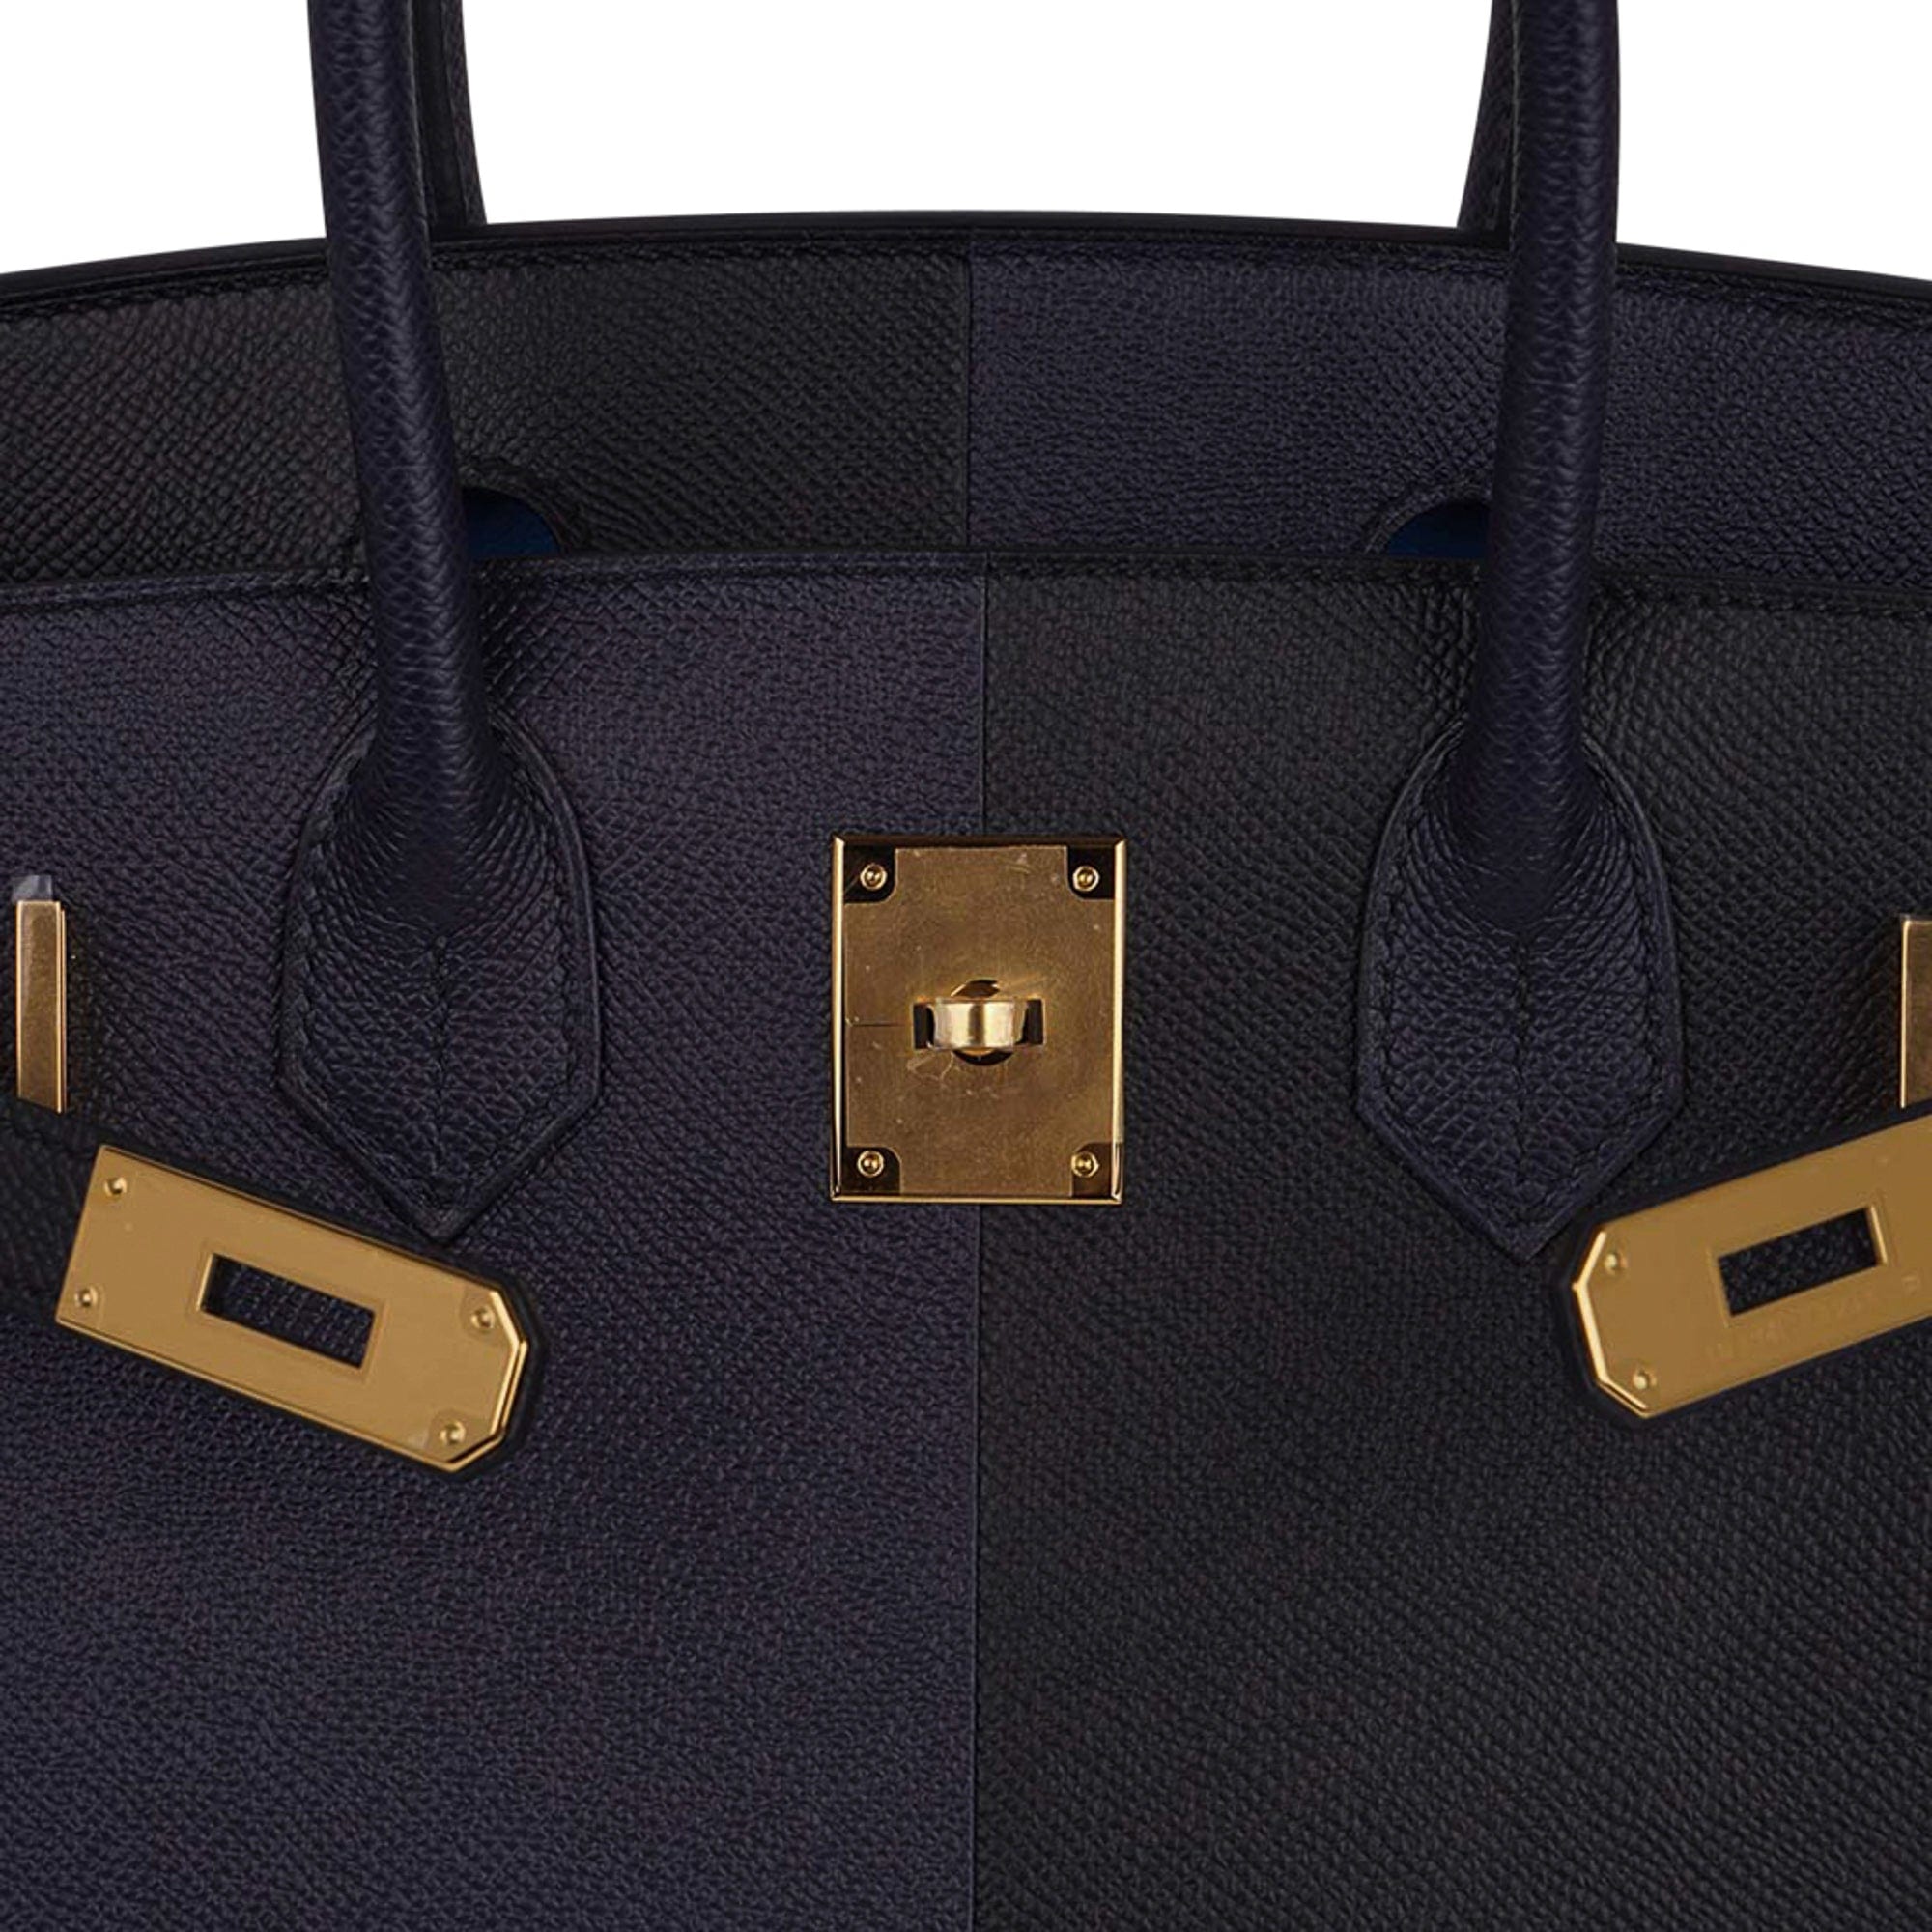 New Hermès Kazak Limited Edition Birkin 30 Handbag in Blue/Red Epsom Leather